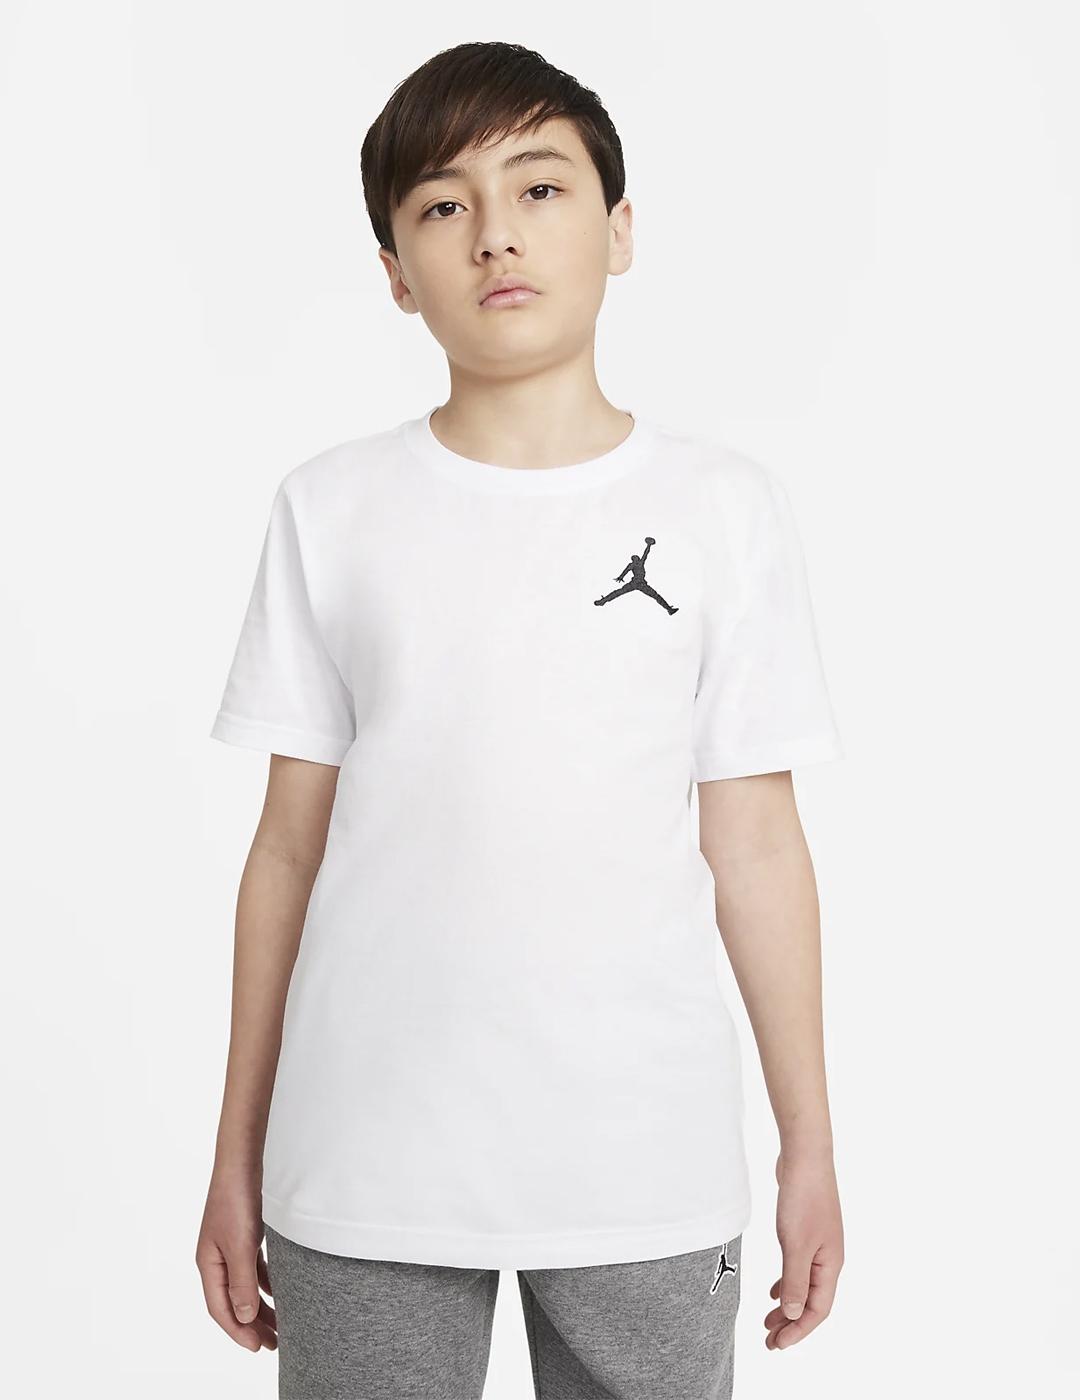 Camiseta Jordan 23 blanca junior